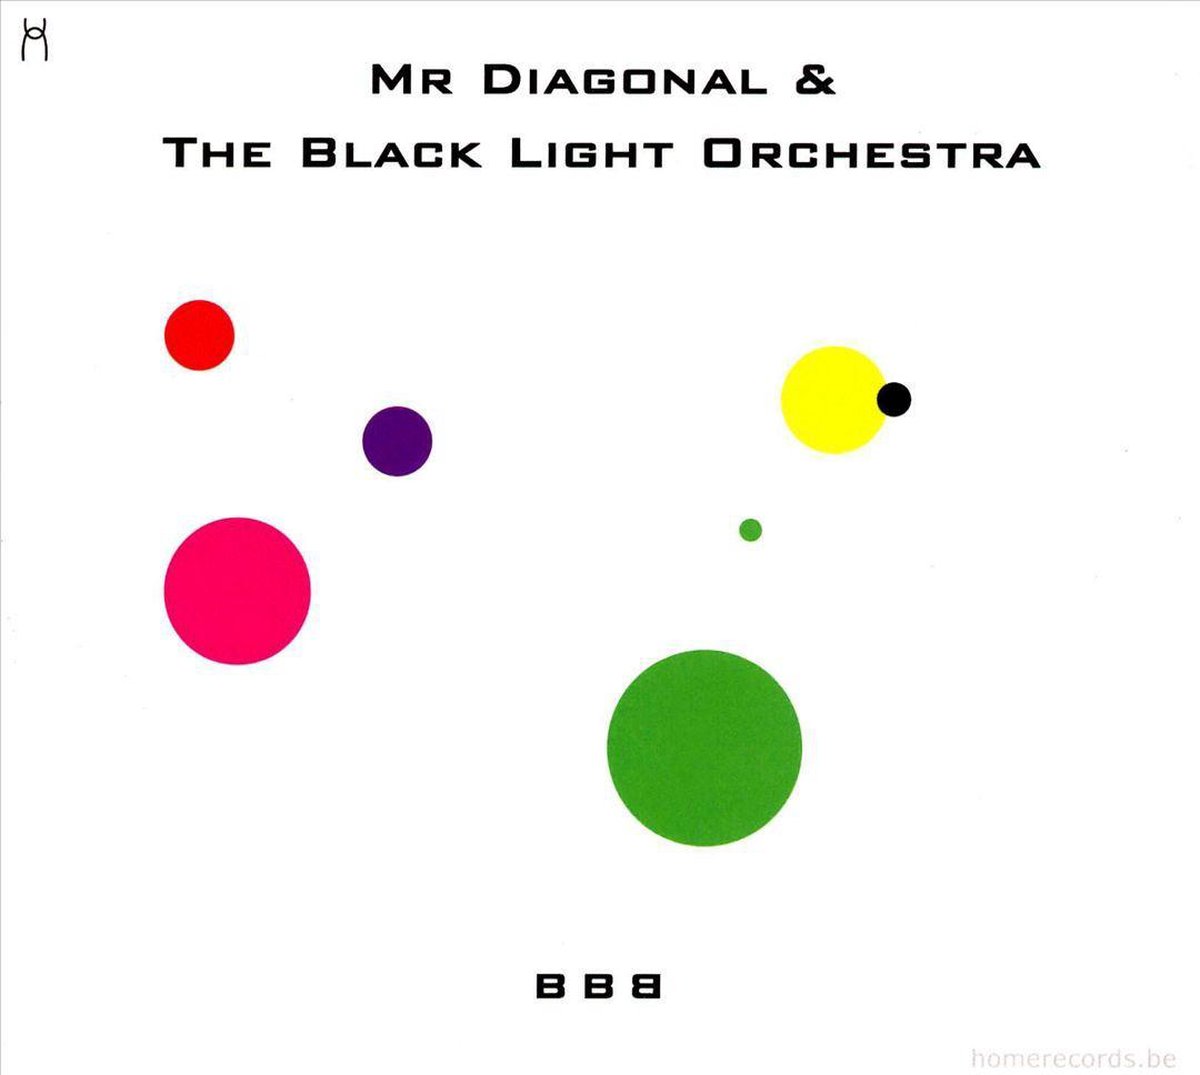 Mr Diagonal & The Black Light Orchestra - BBB (CD)